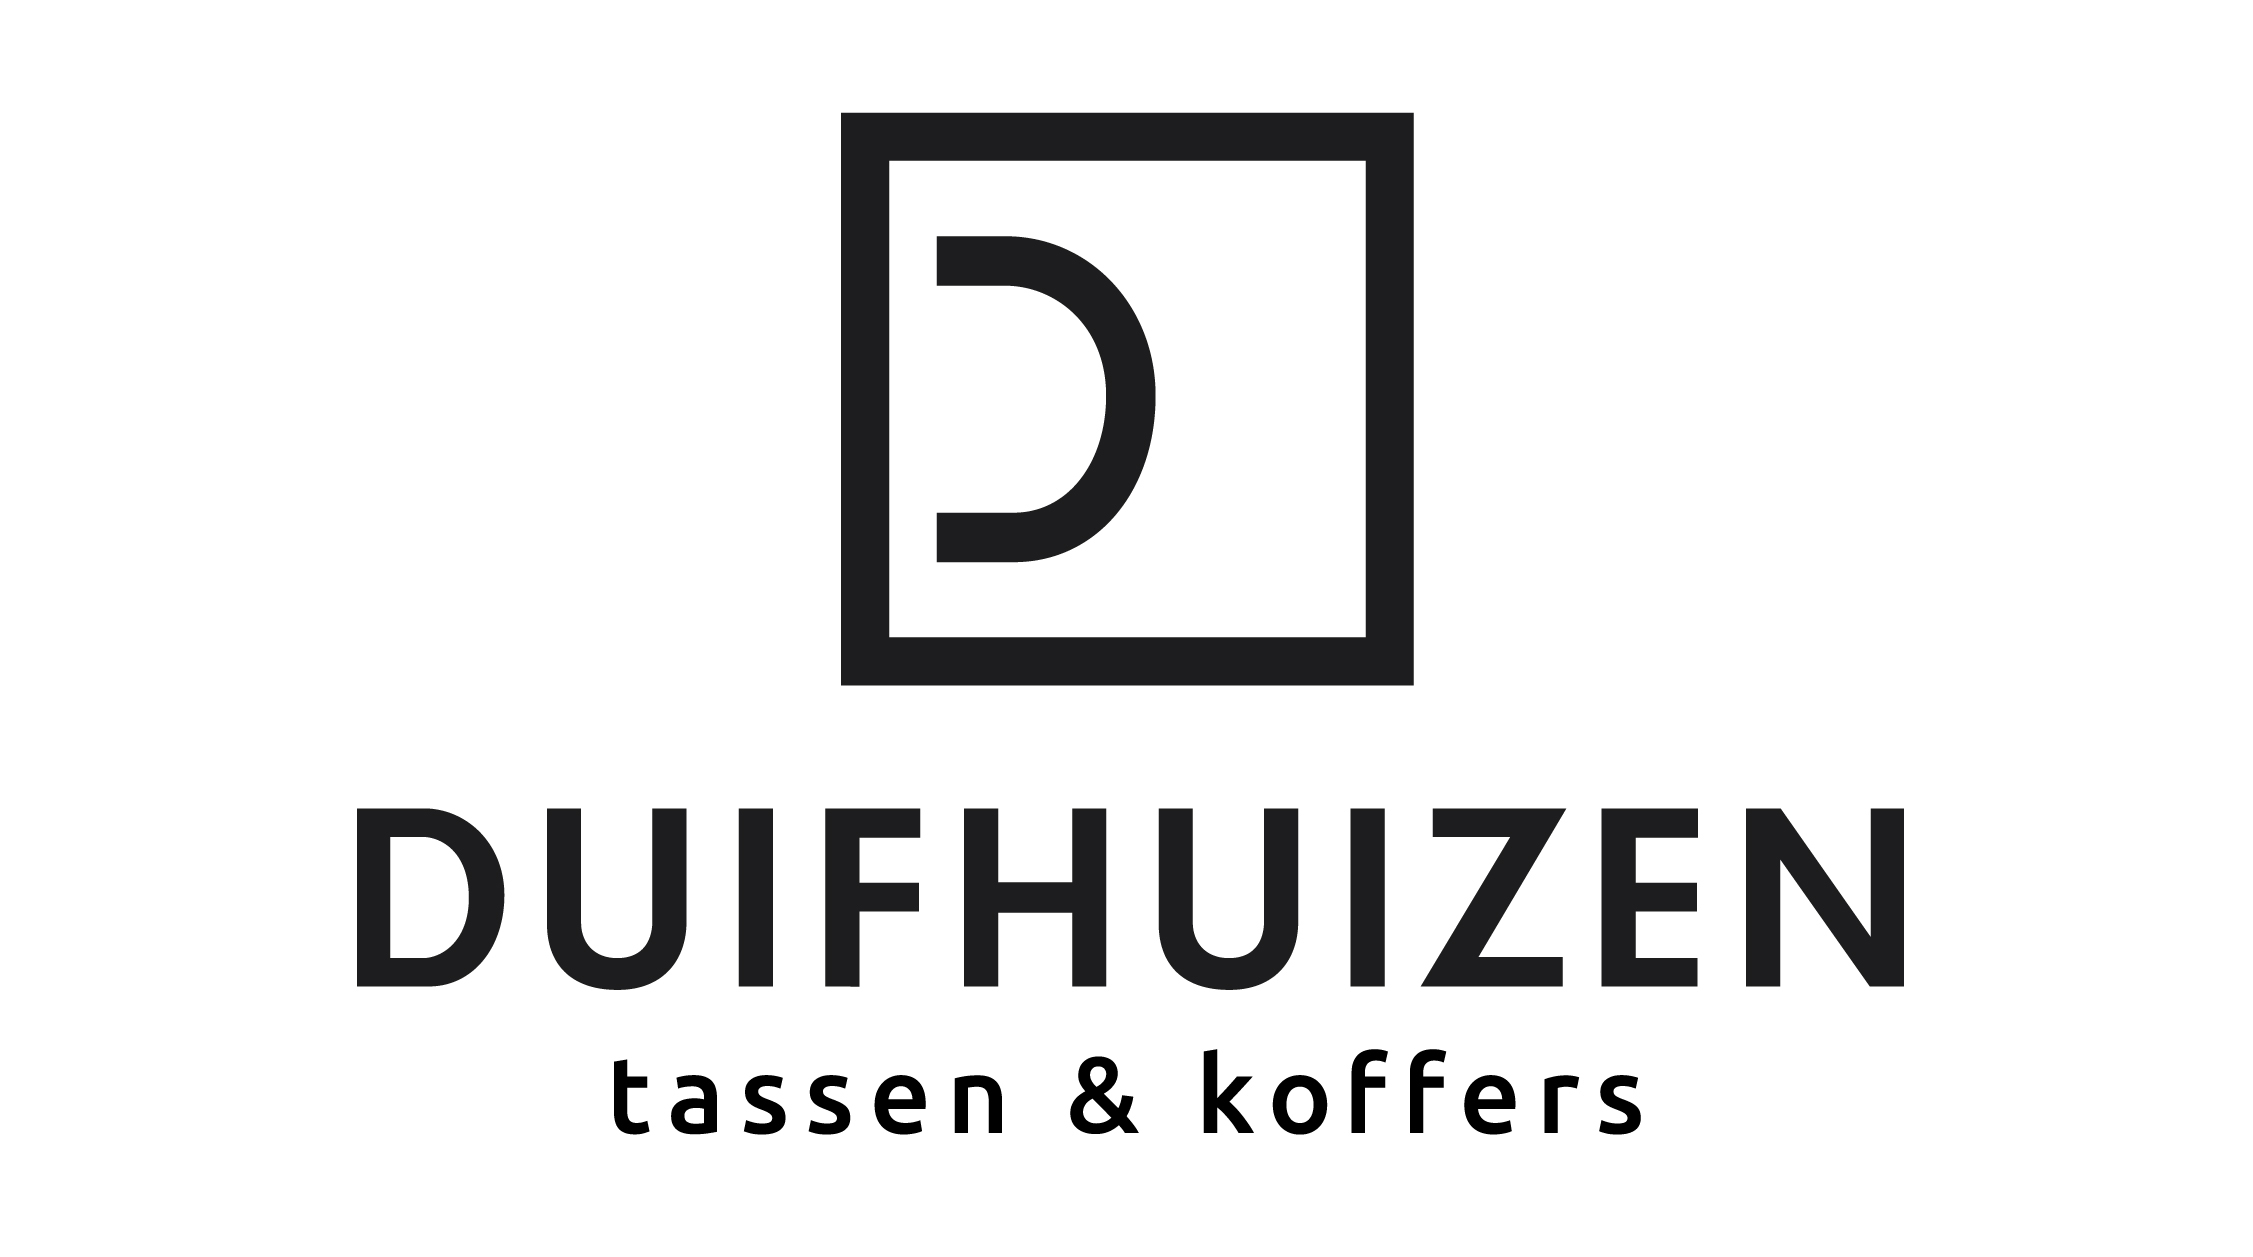 Eindeloos getuige breedtegraad Reviews over Duifhuizen tassen en koffers - Opiness - Spreekt uit ervaring